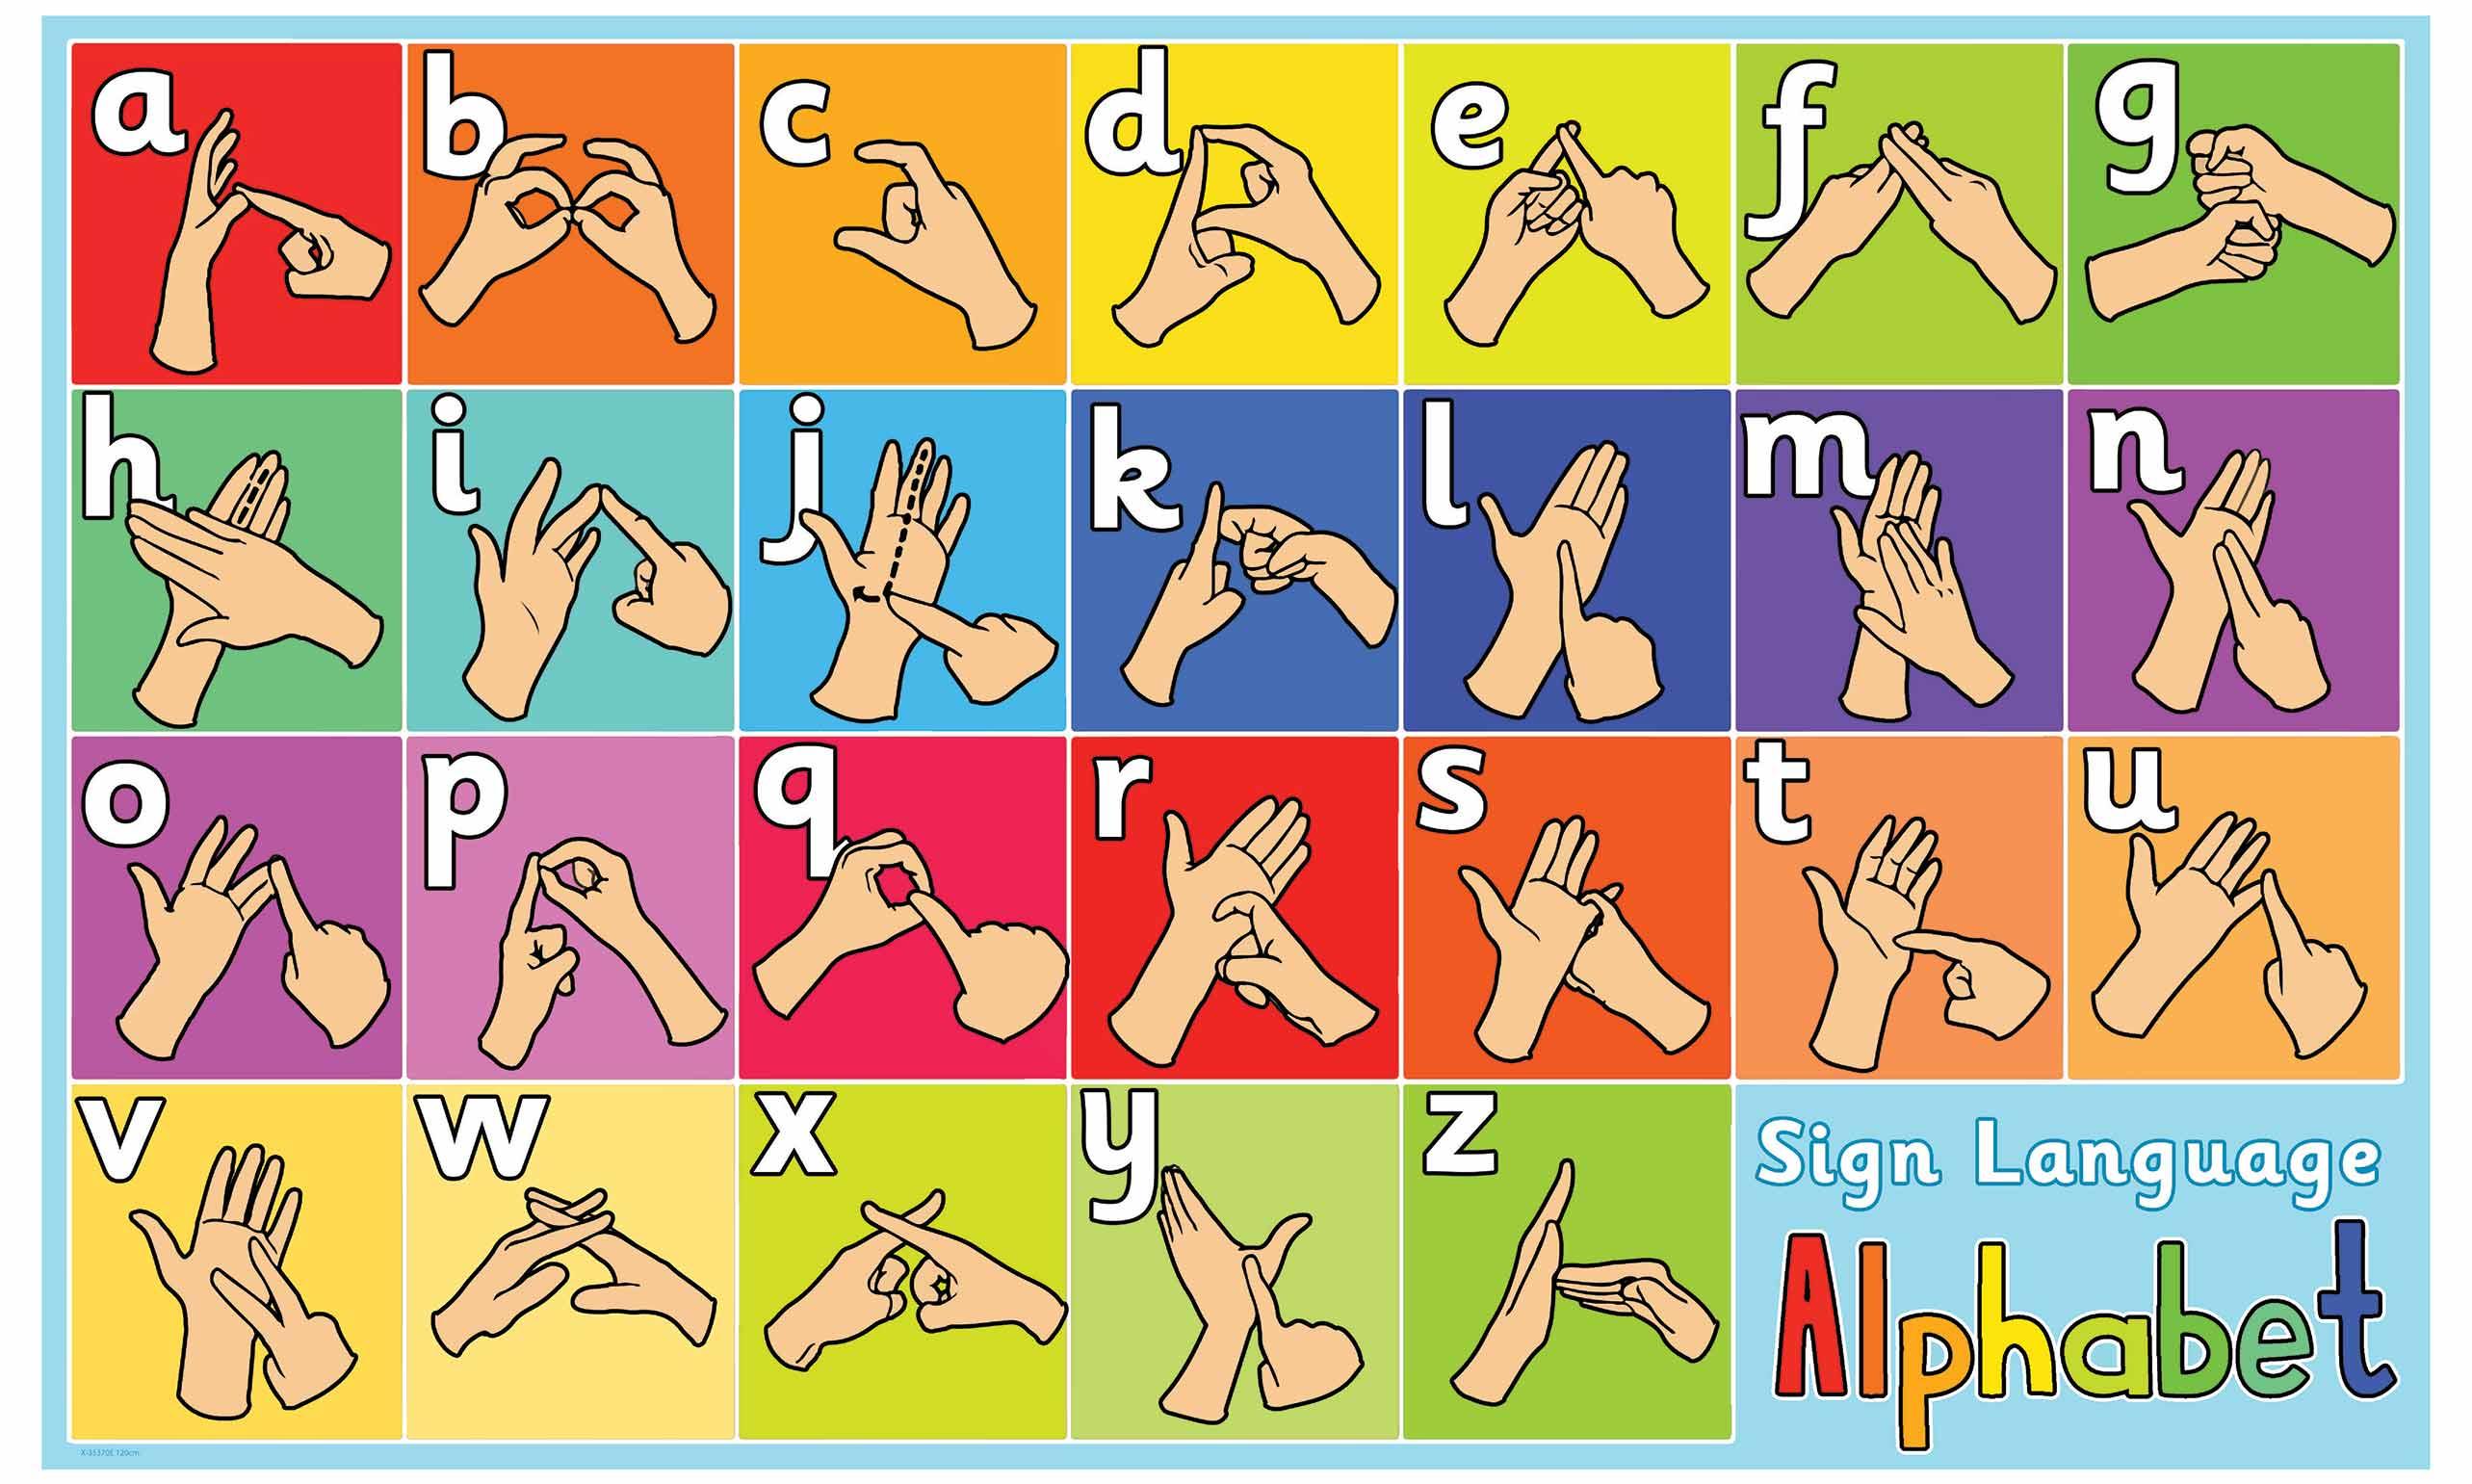 sign-language-alphabet-sign